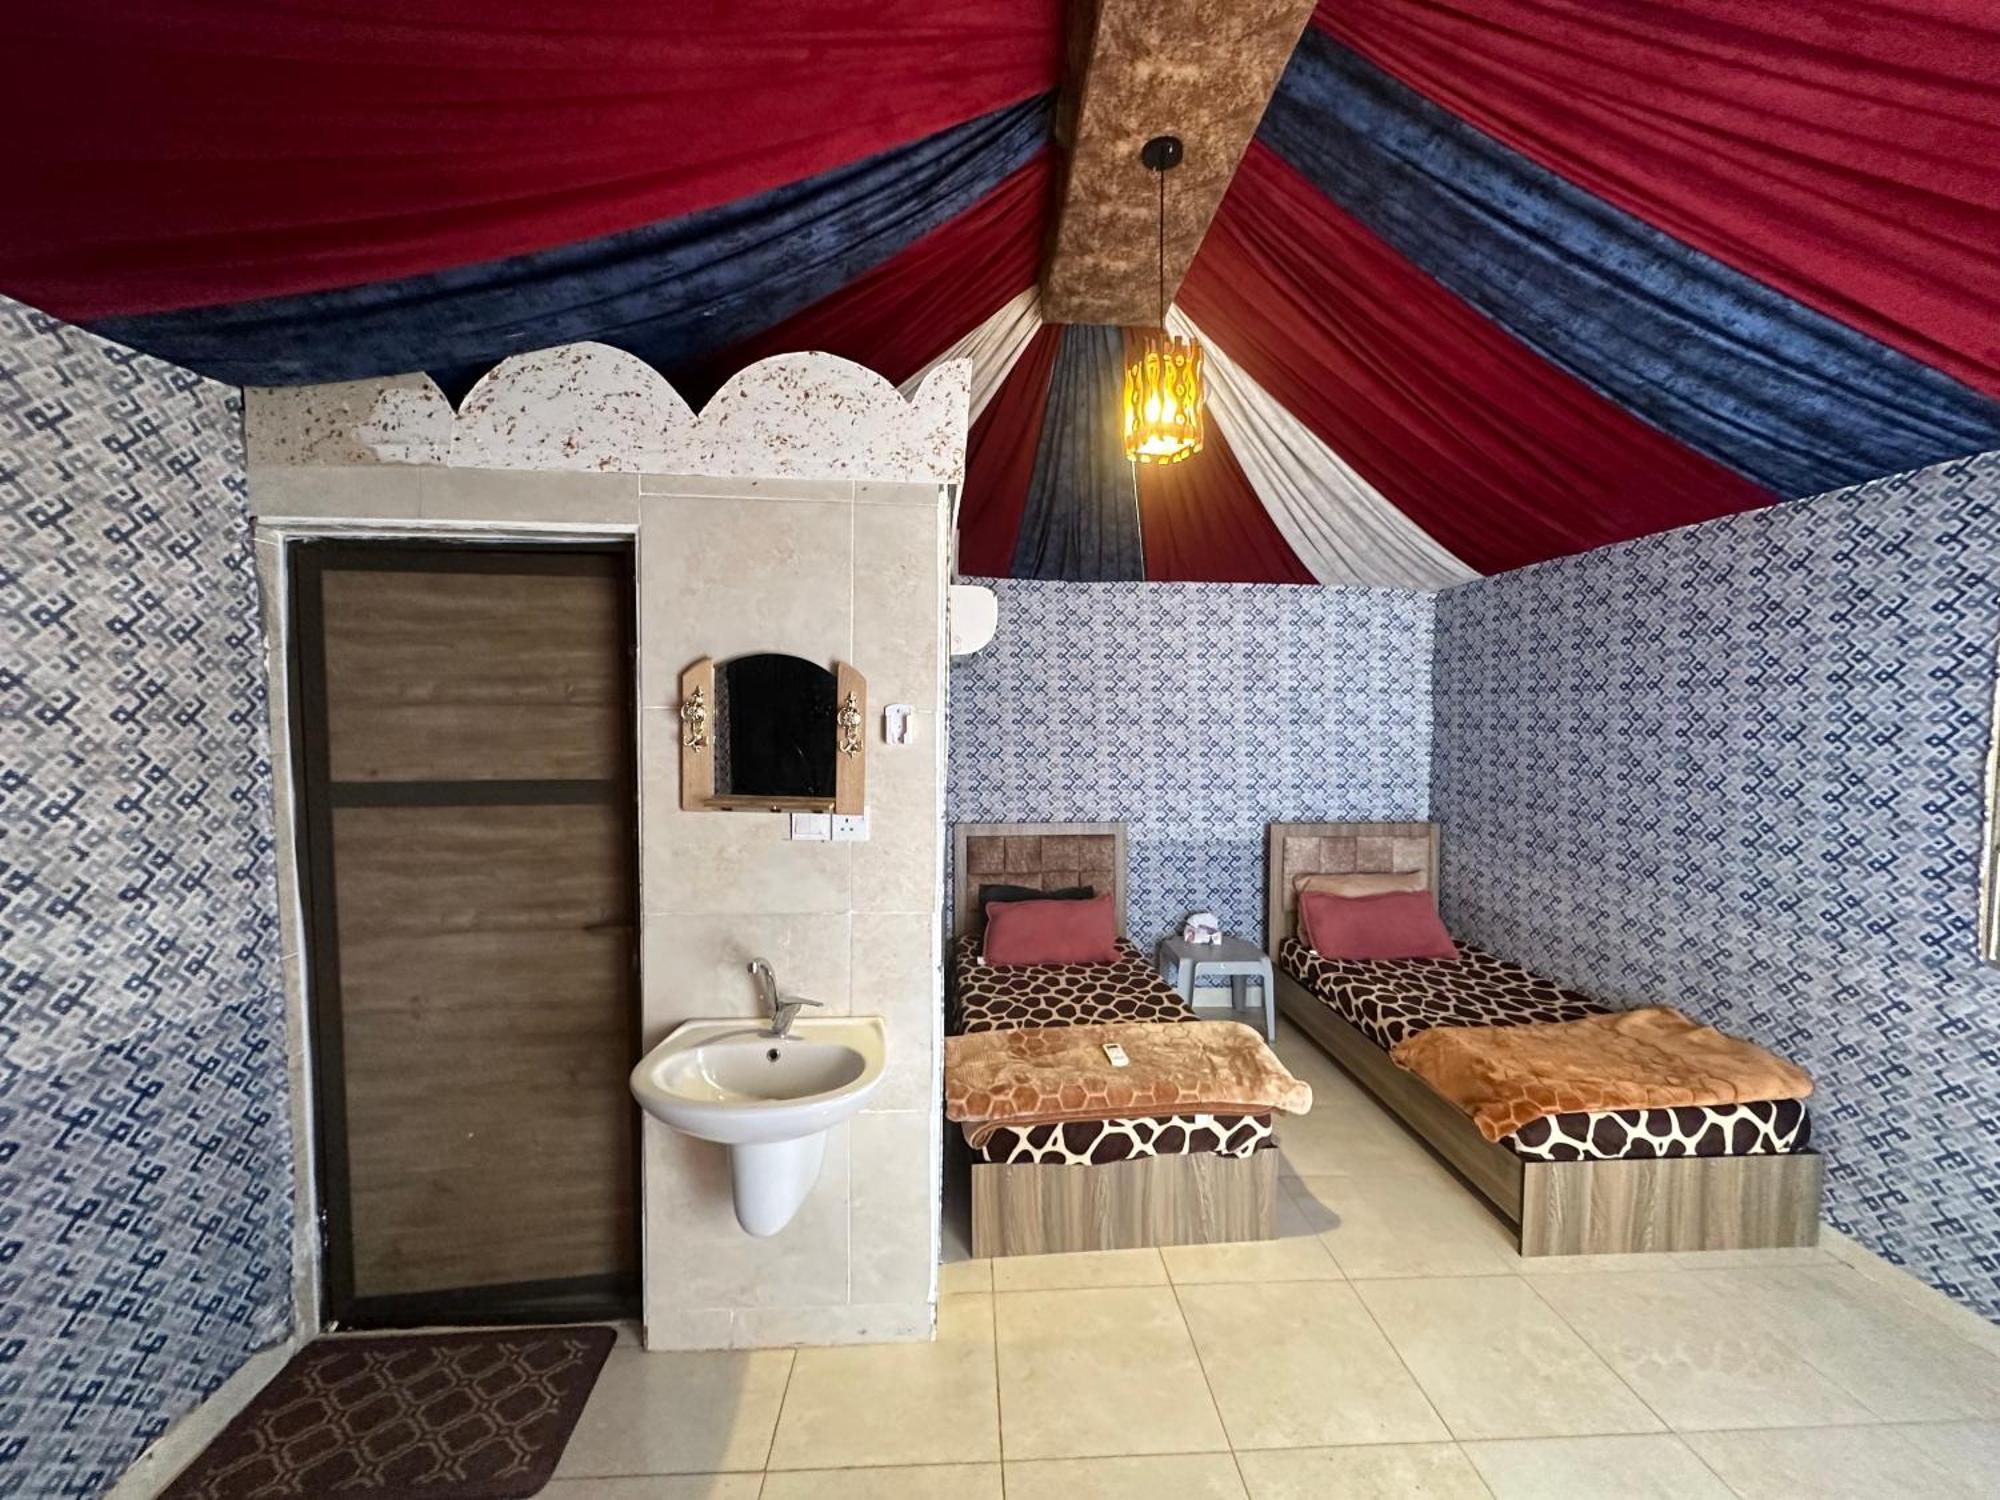 Shakria Bedouin Life Camp Hotel Wadi Rum Exterior foto